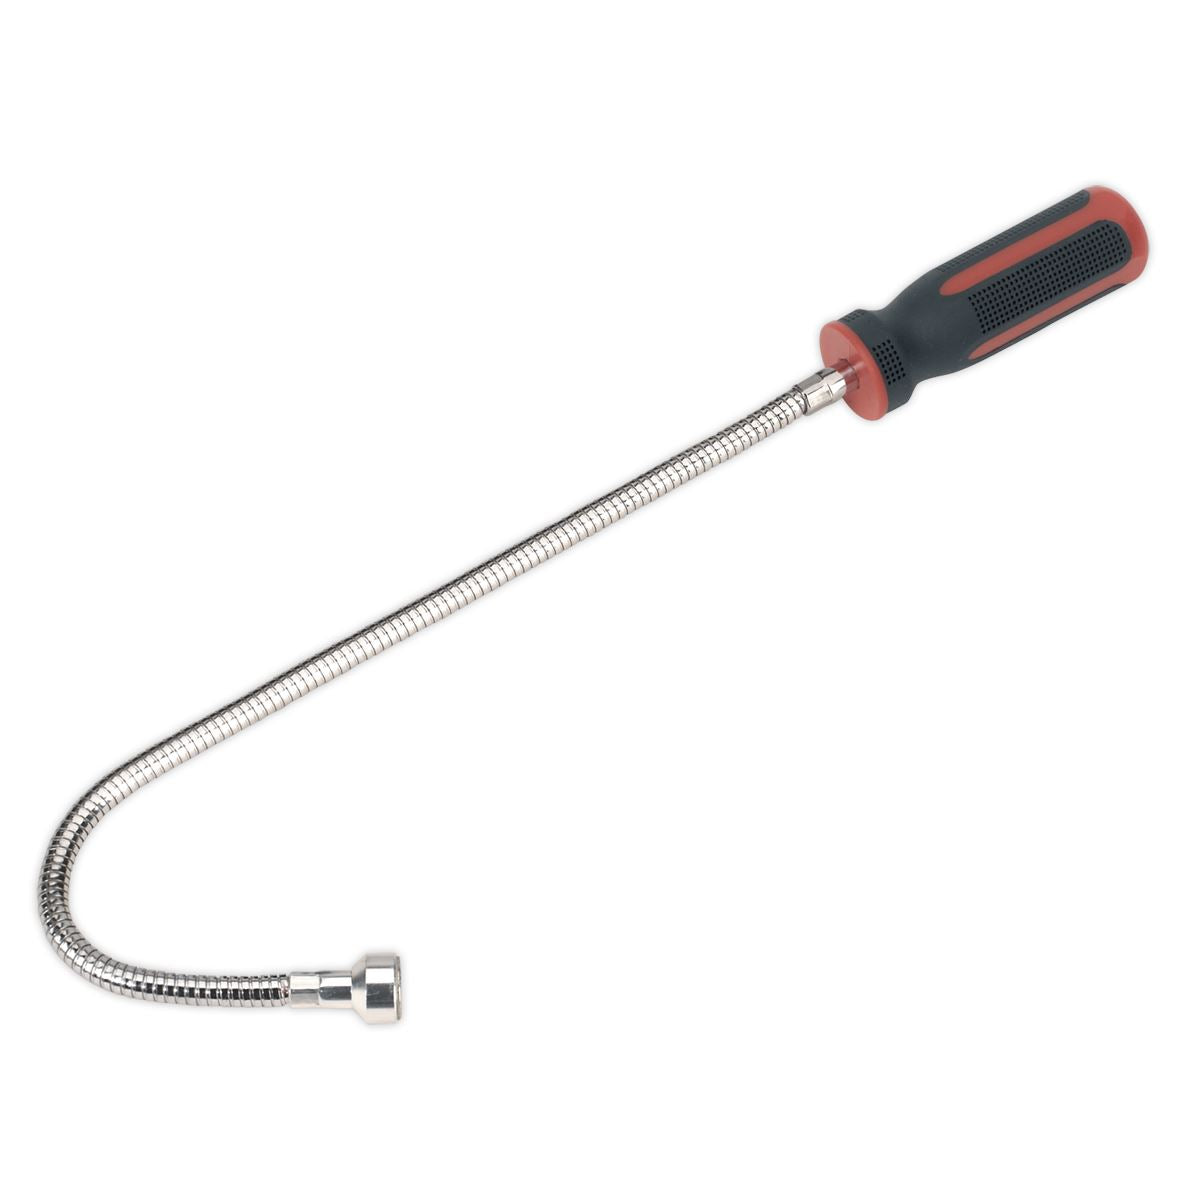 Sealey Premier Flexible Magnetic Pick-Up Tool 3kg Capacity